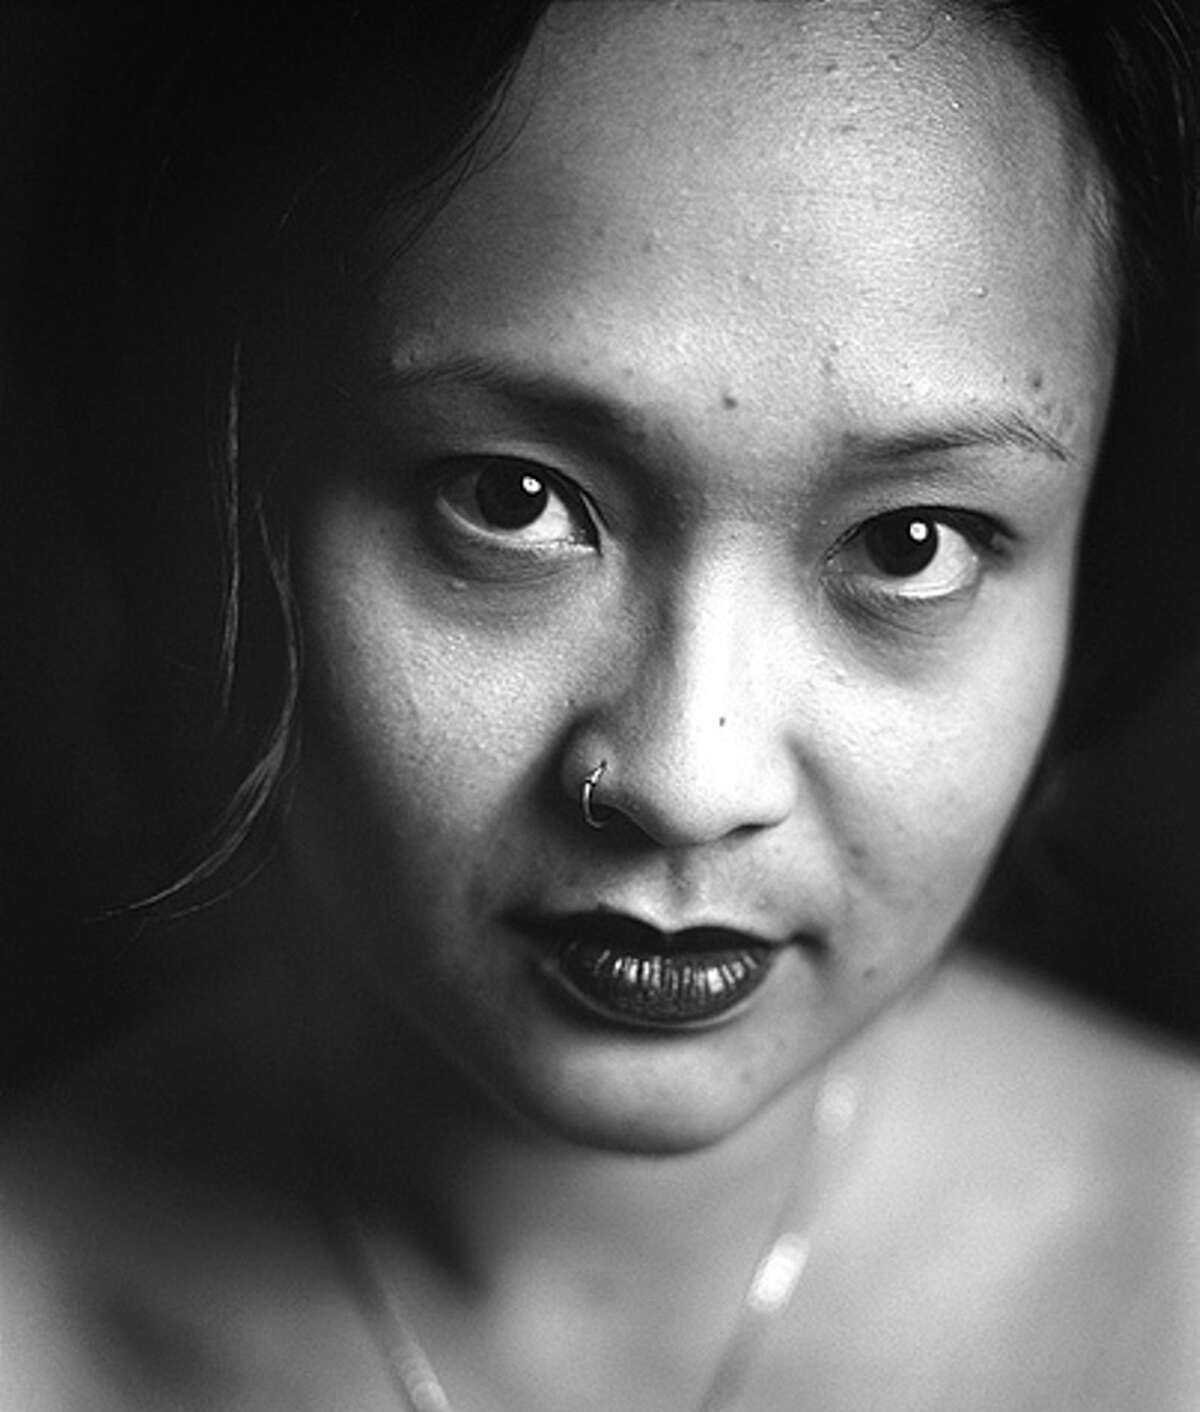 Barbara Jane Reyes’ Kuwentuhan brings poets together in a largely improvised format.